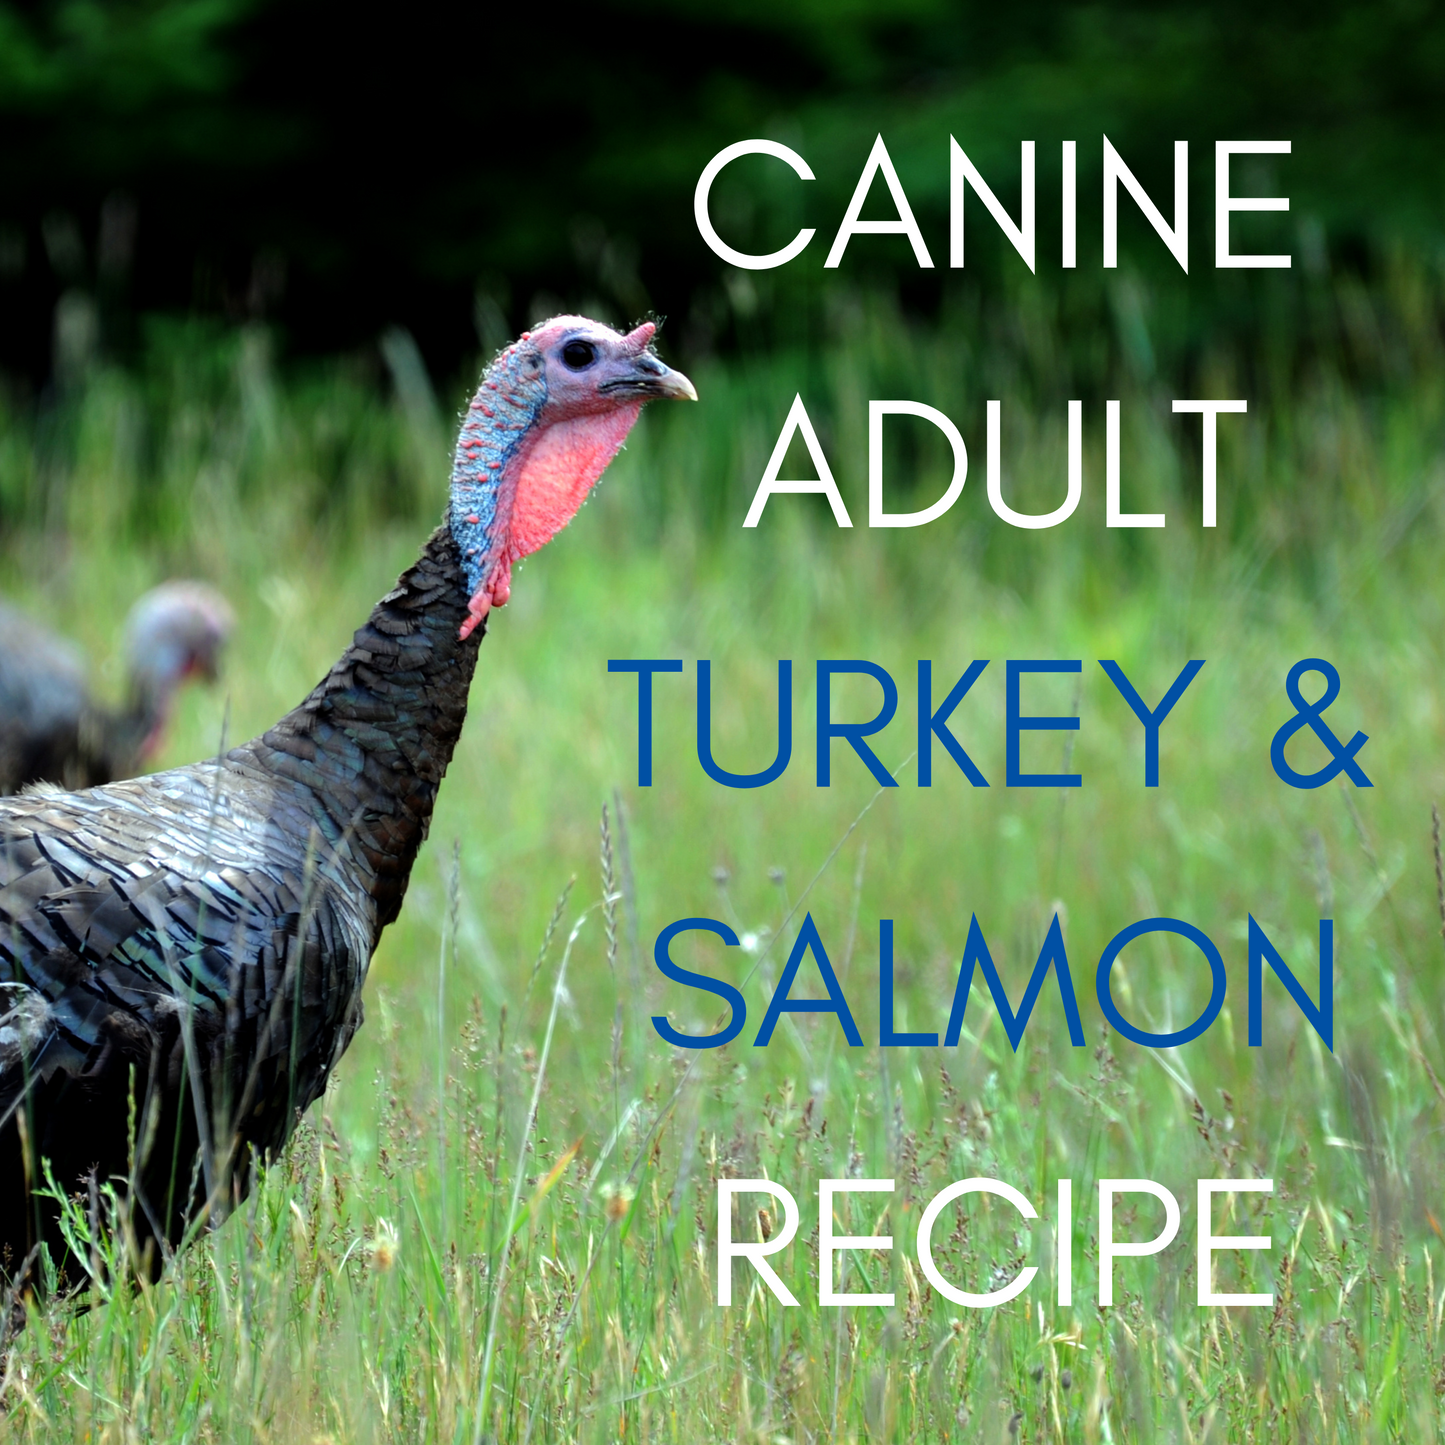 Dr. Evelyn's Low Oxalate Turkey & Salmon Dog Food Recipe